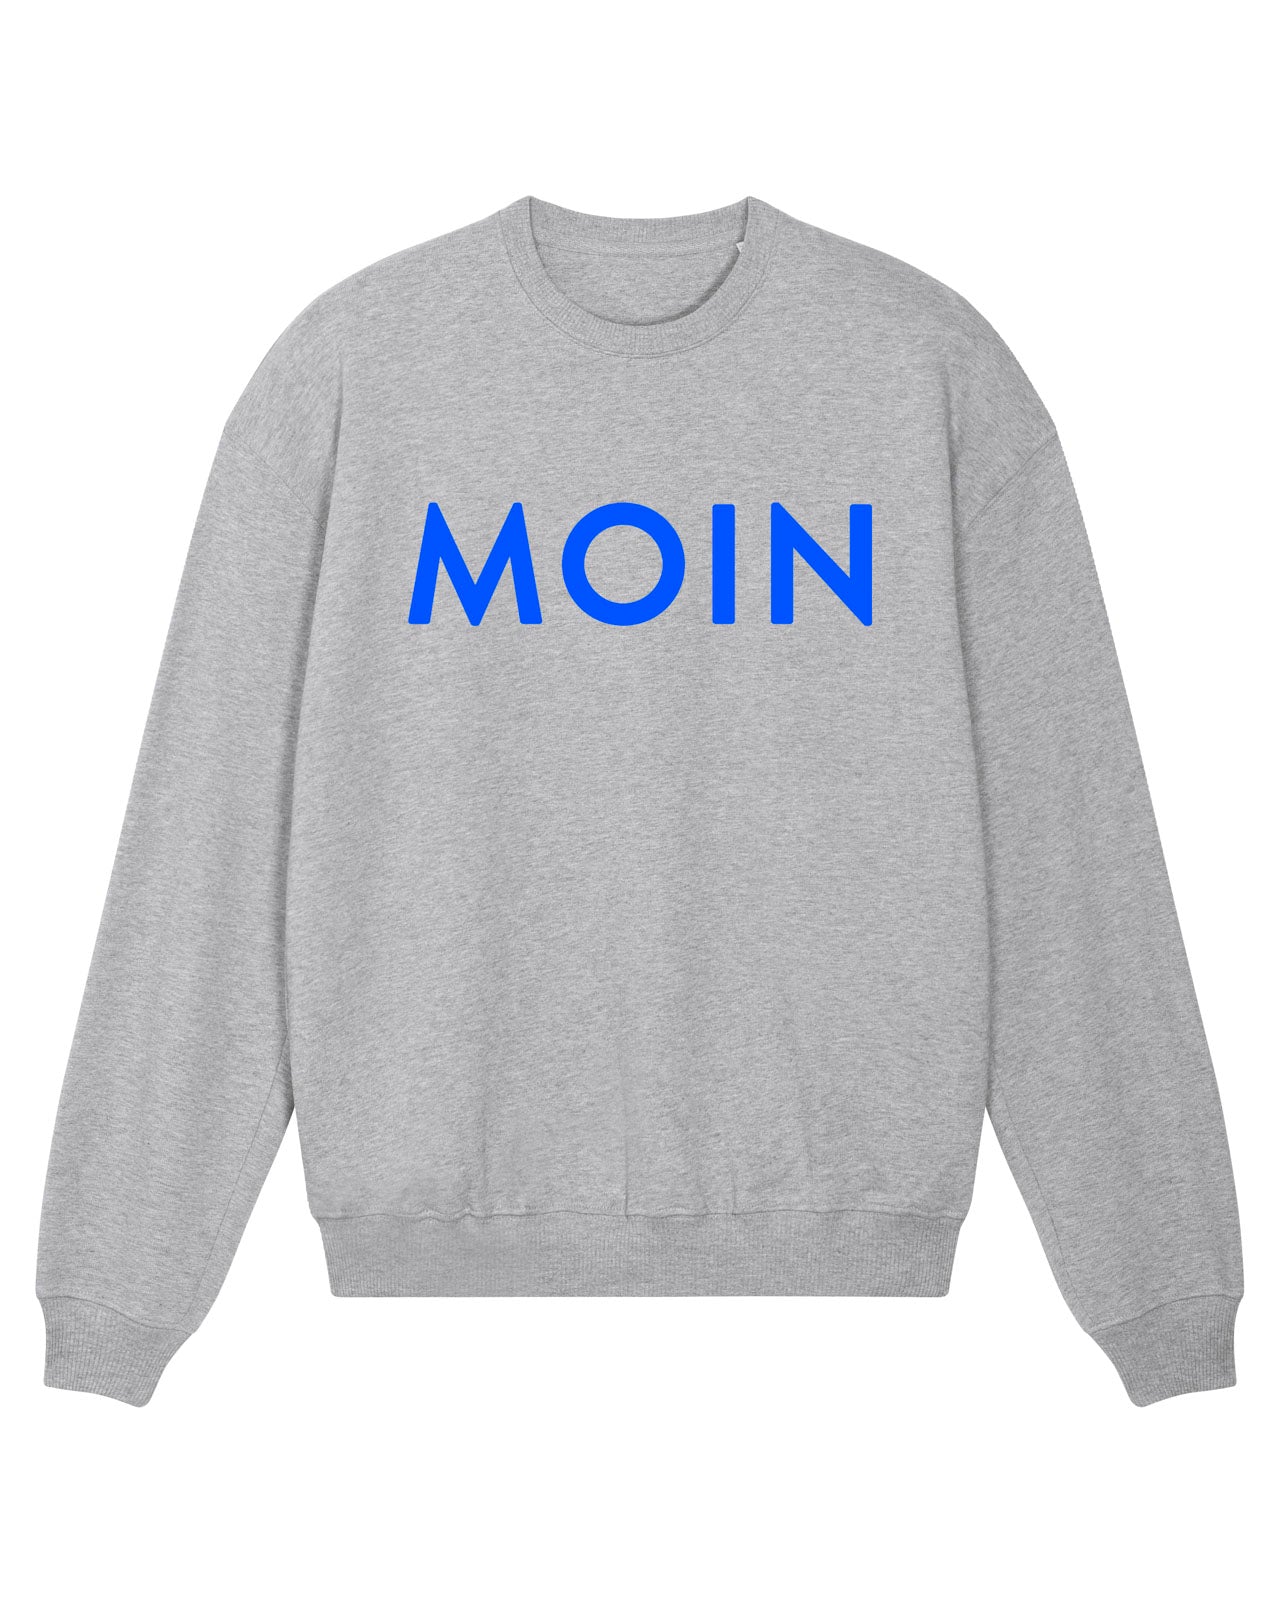 Sweatshirt "Moin" Heather Grey/Royal Blue